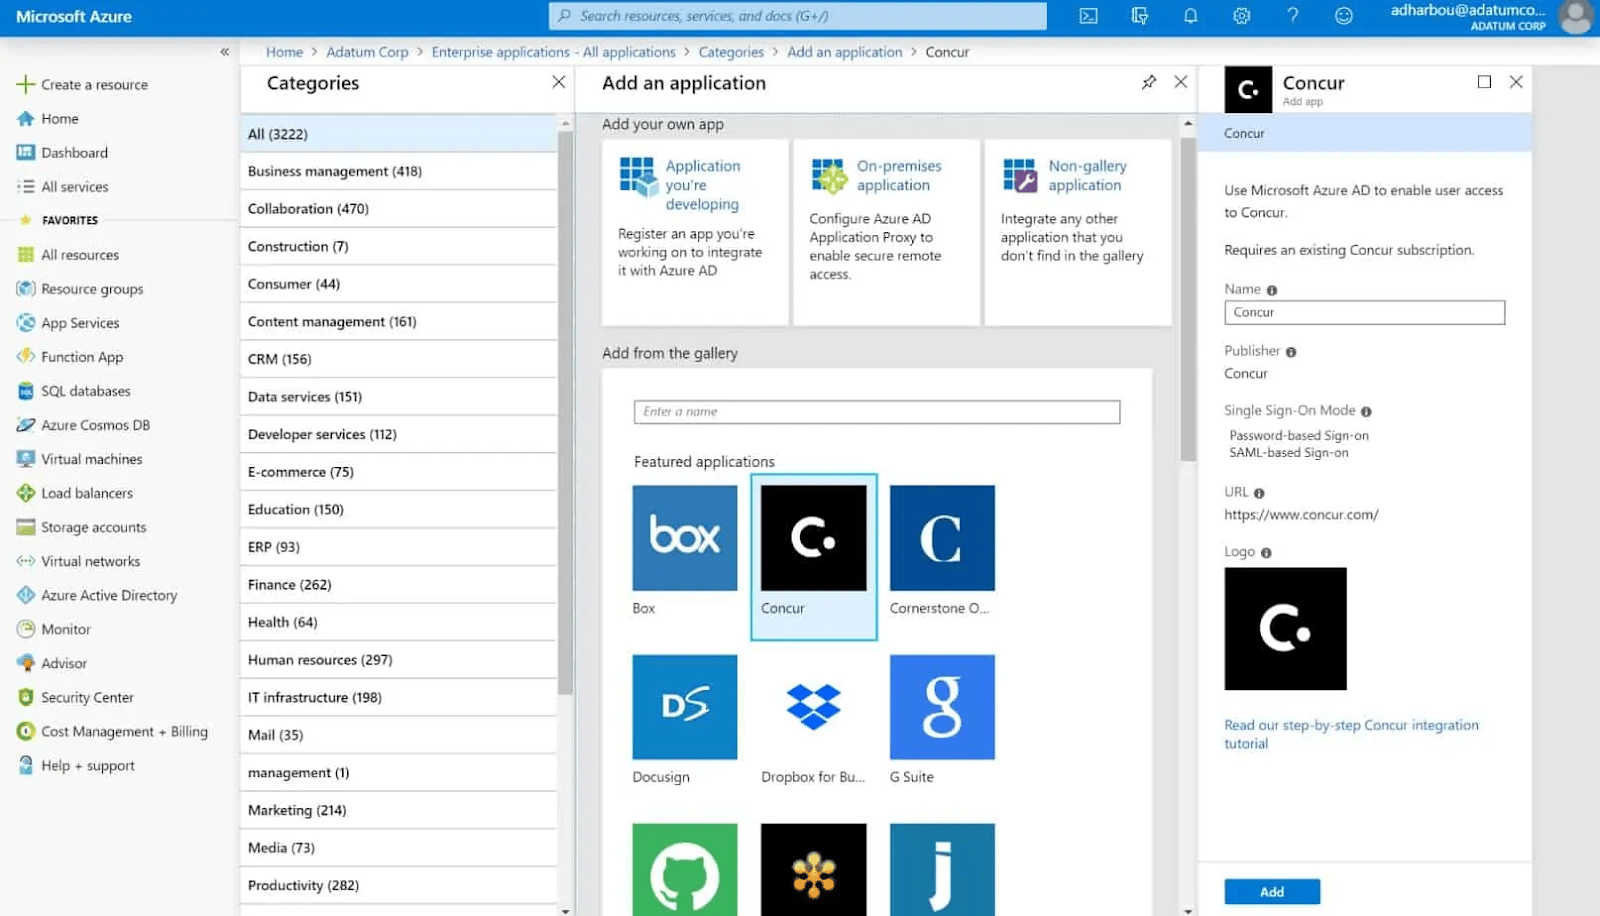 Microsoft Azure Active Directory IAM interface